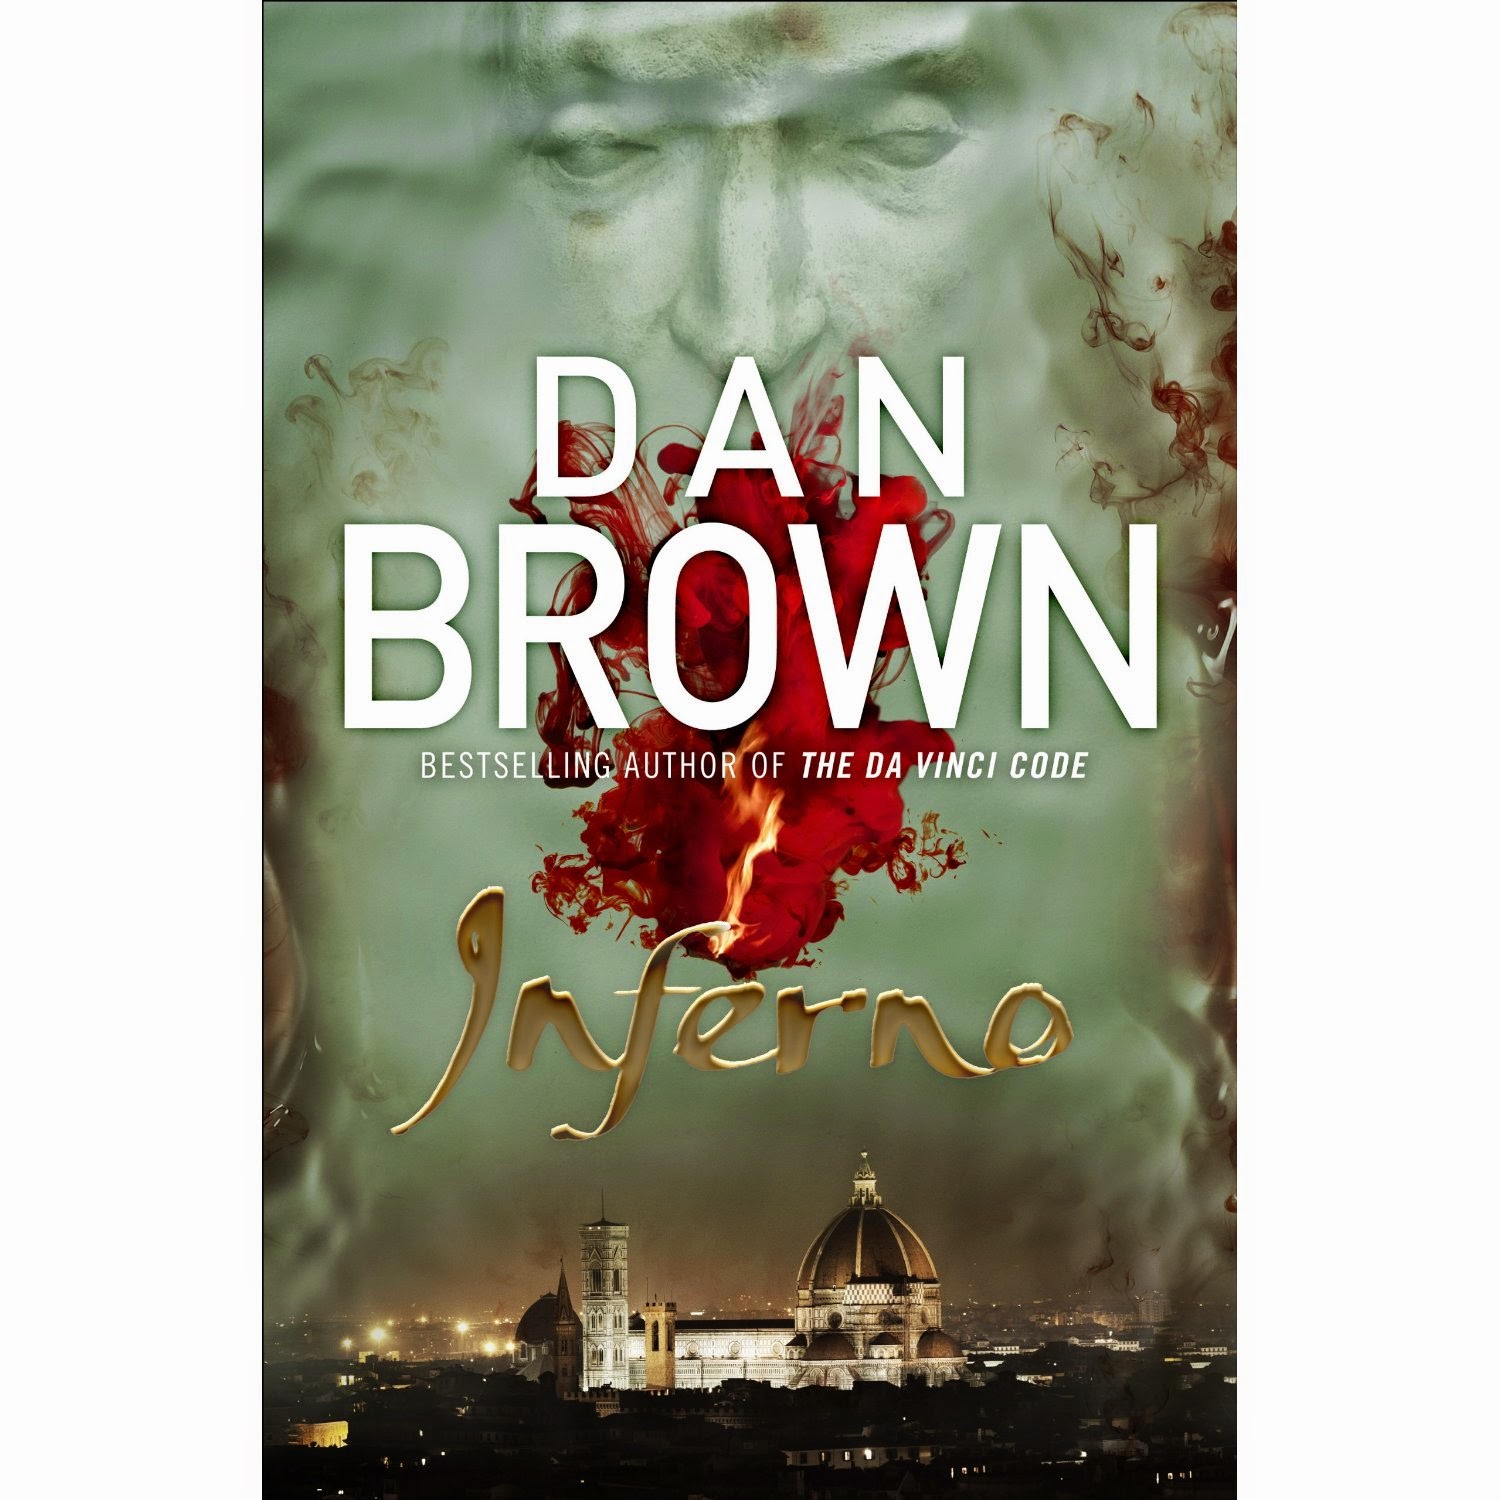 The Da Vinci Code By Dan Brown Free Pdf Download